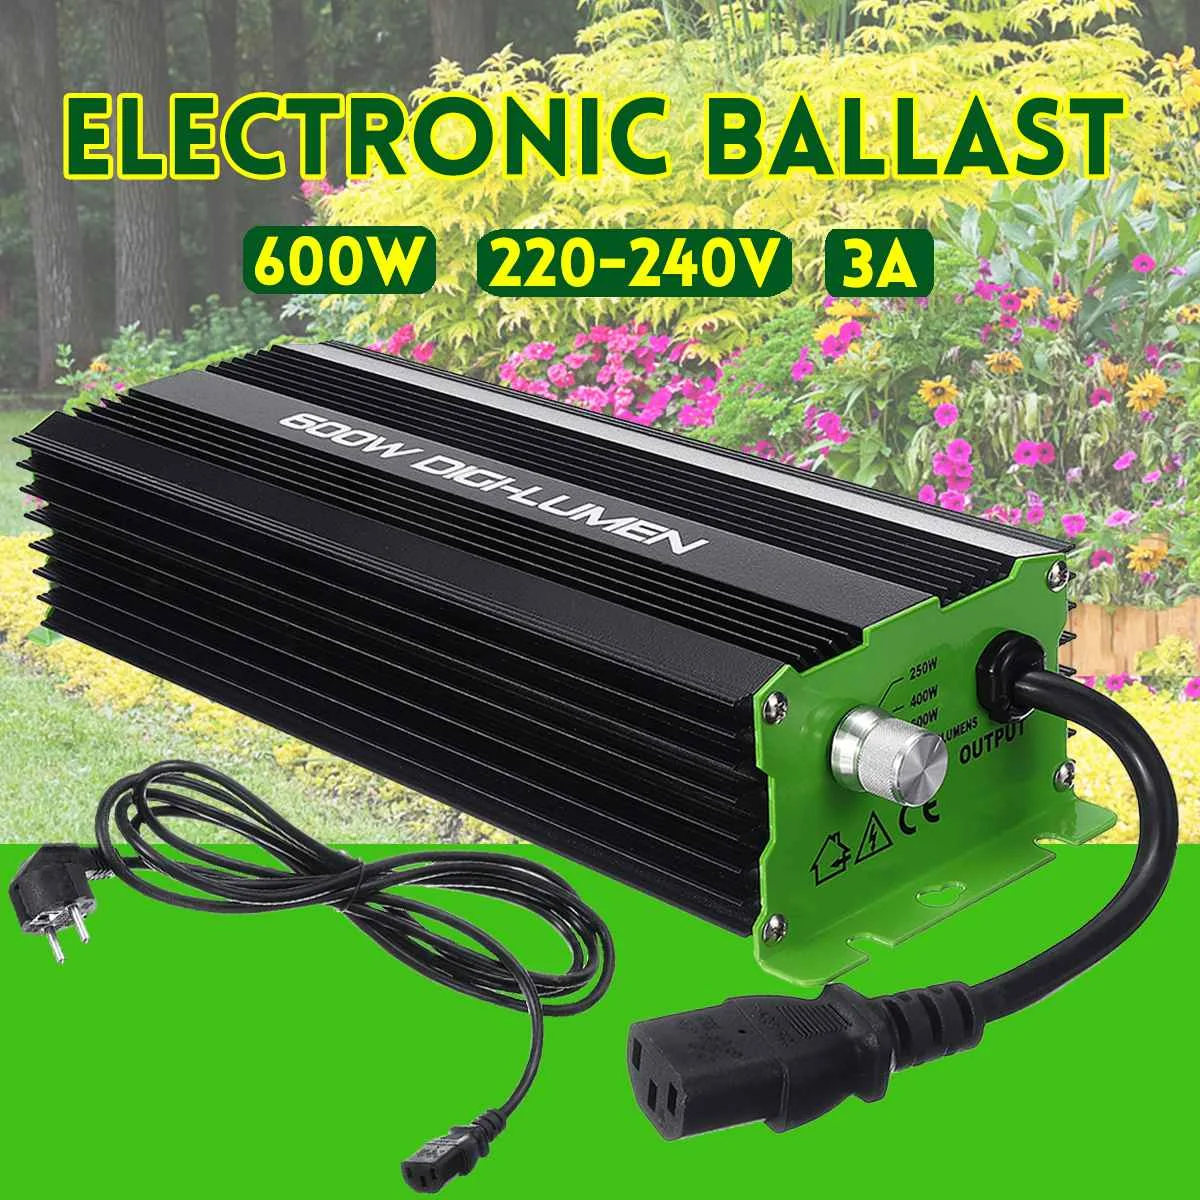 

600W Digital Ballasts for Garden Planter Grow Lights HPS MH Bulbs Electronic Dimmable EU PLUG 3A 220-240V